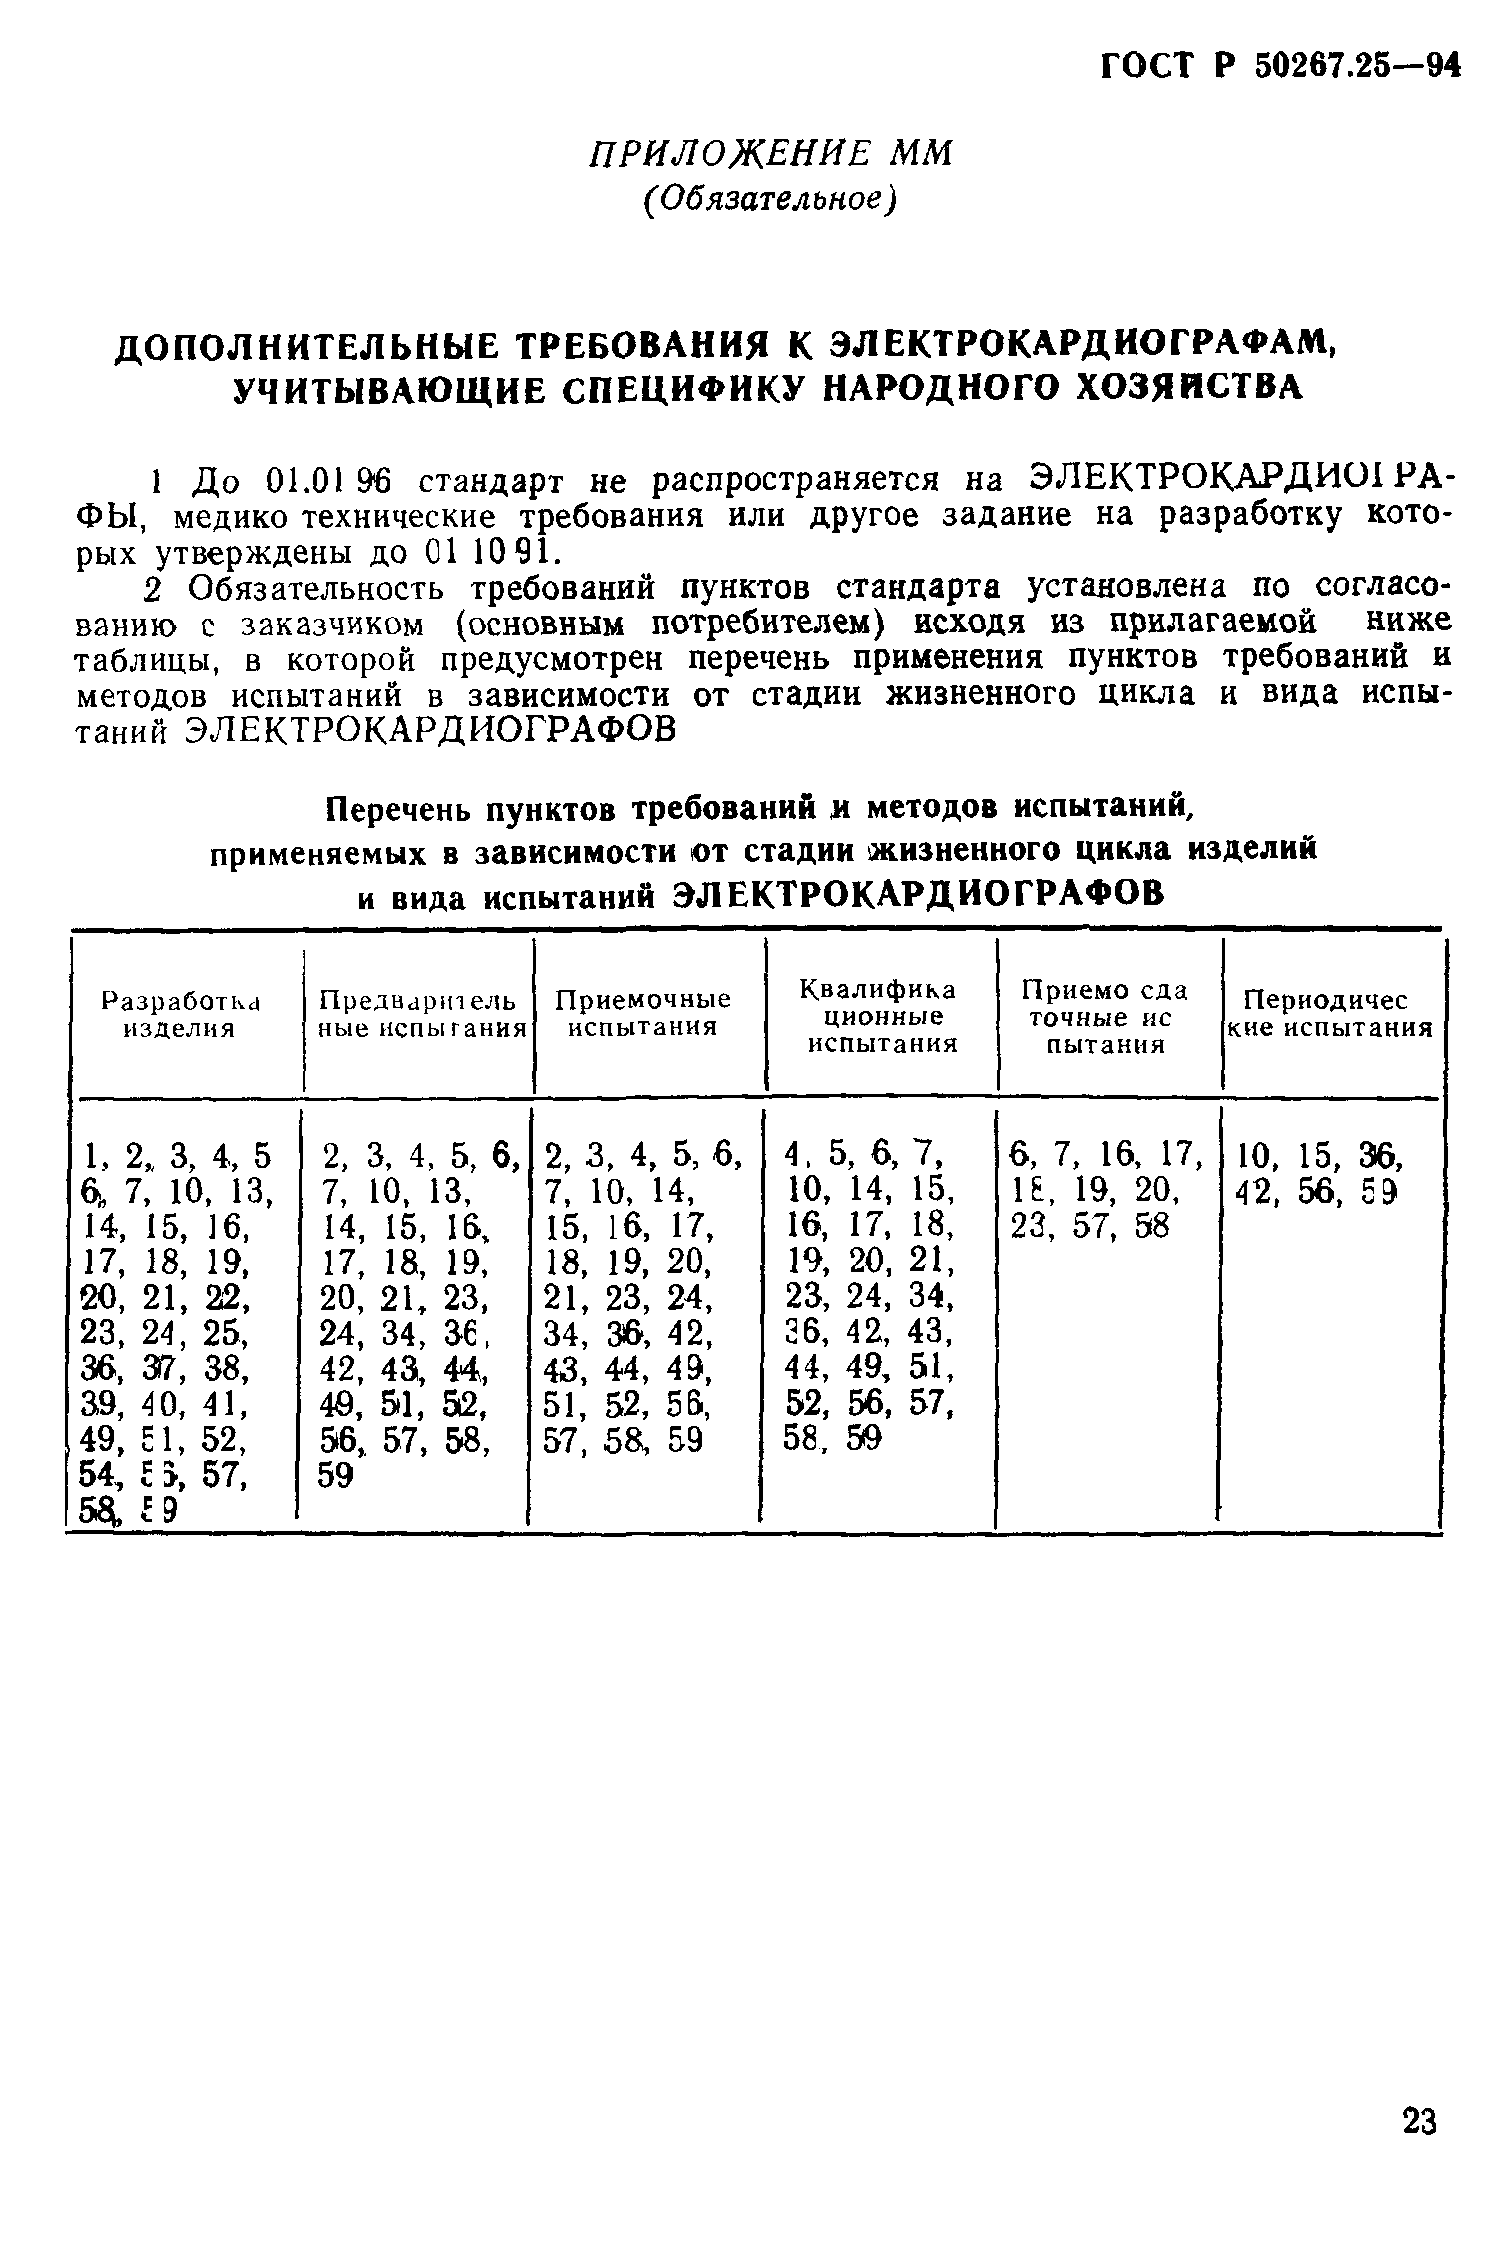 ГОСТ Р 50267.25-94